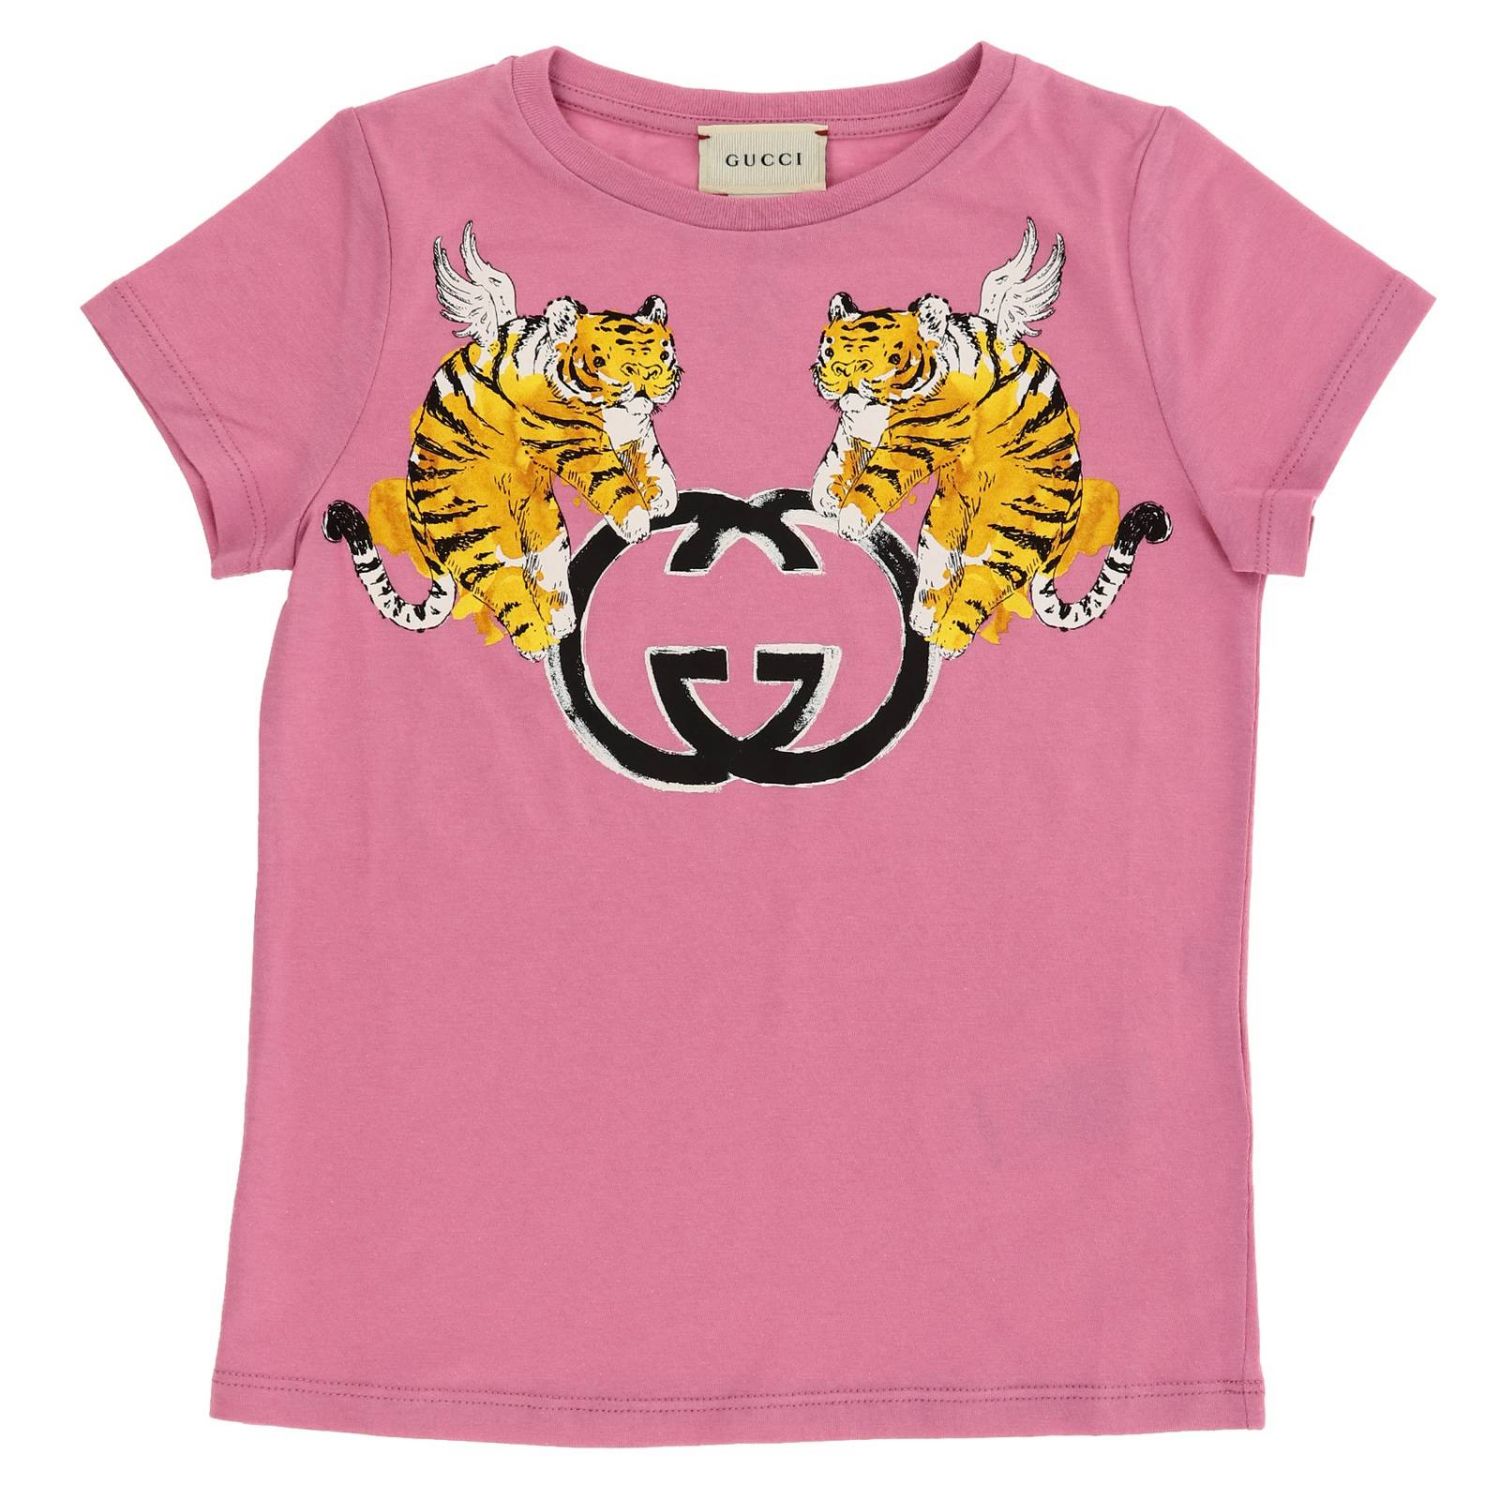 T-shirt kids Gucci | T-Shirt Gucci Kids Pink | T-Shirt Gucci 554879